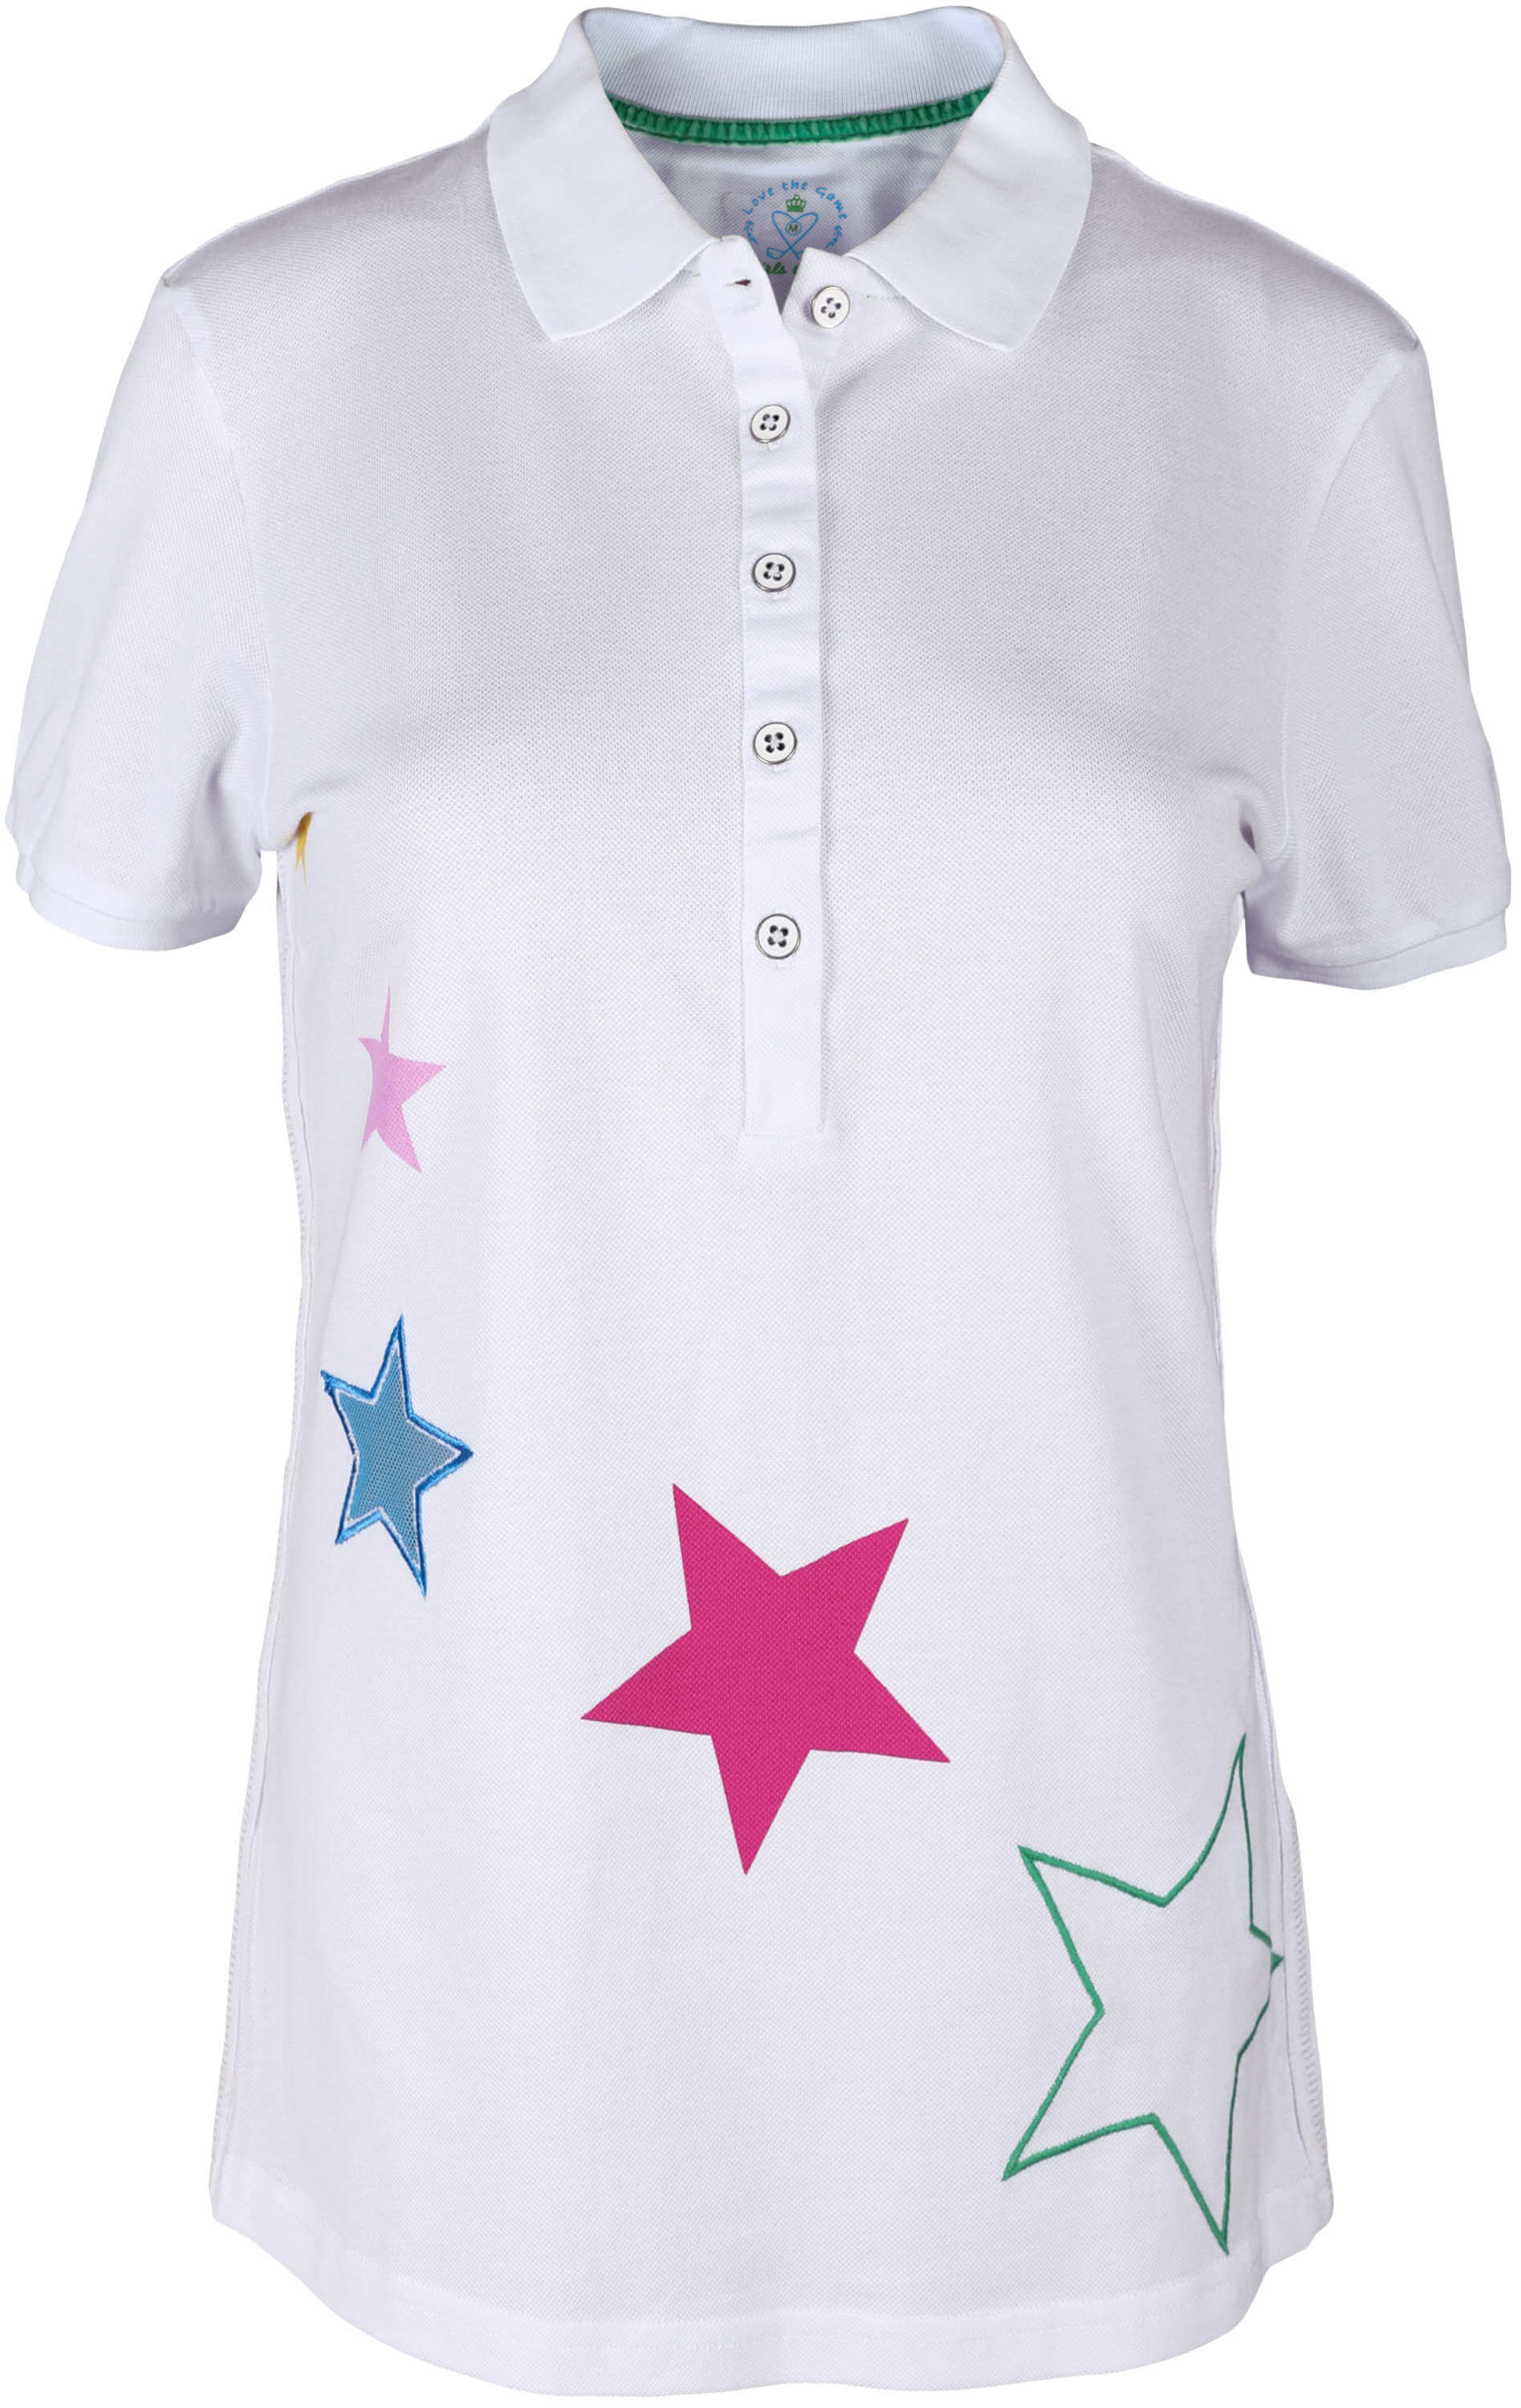 girls golf Multicolored Stars Polo, white